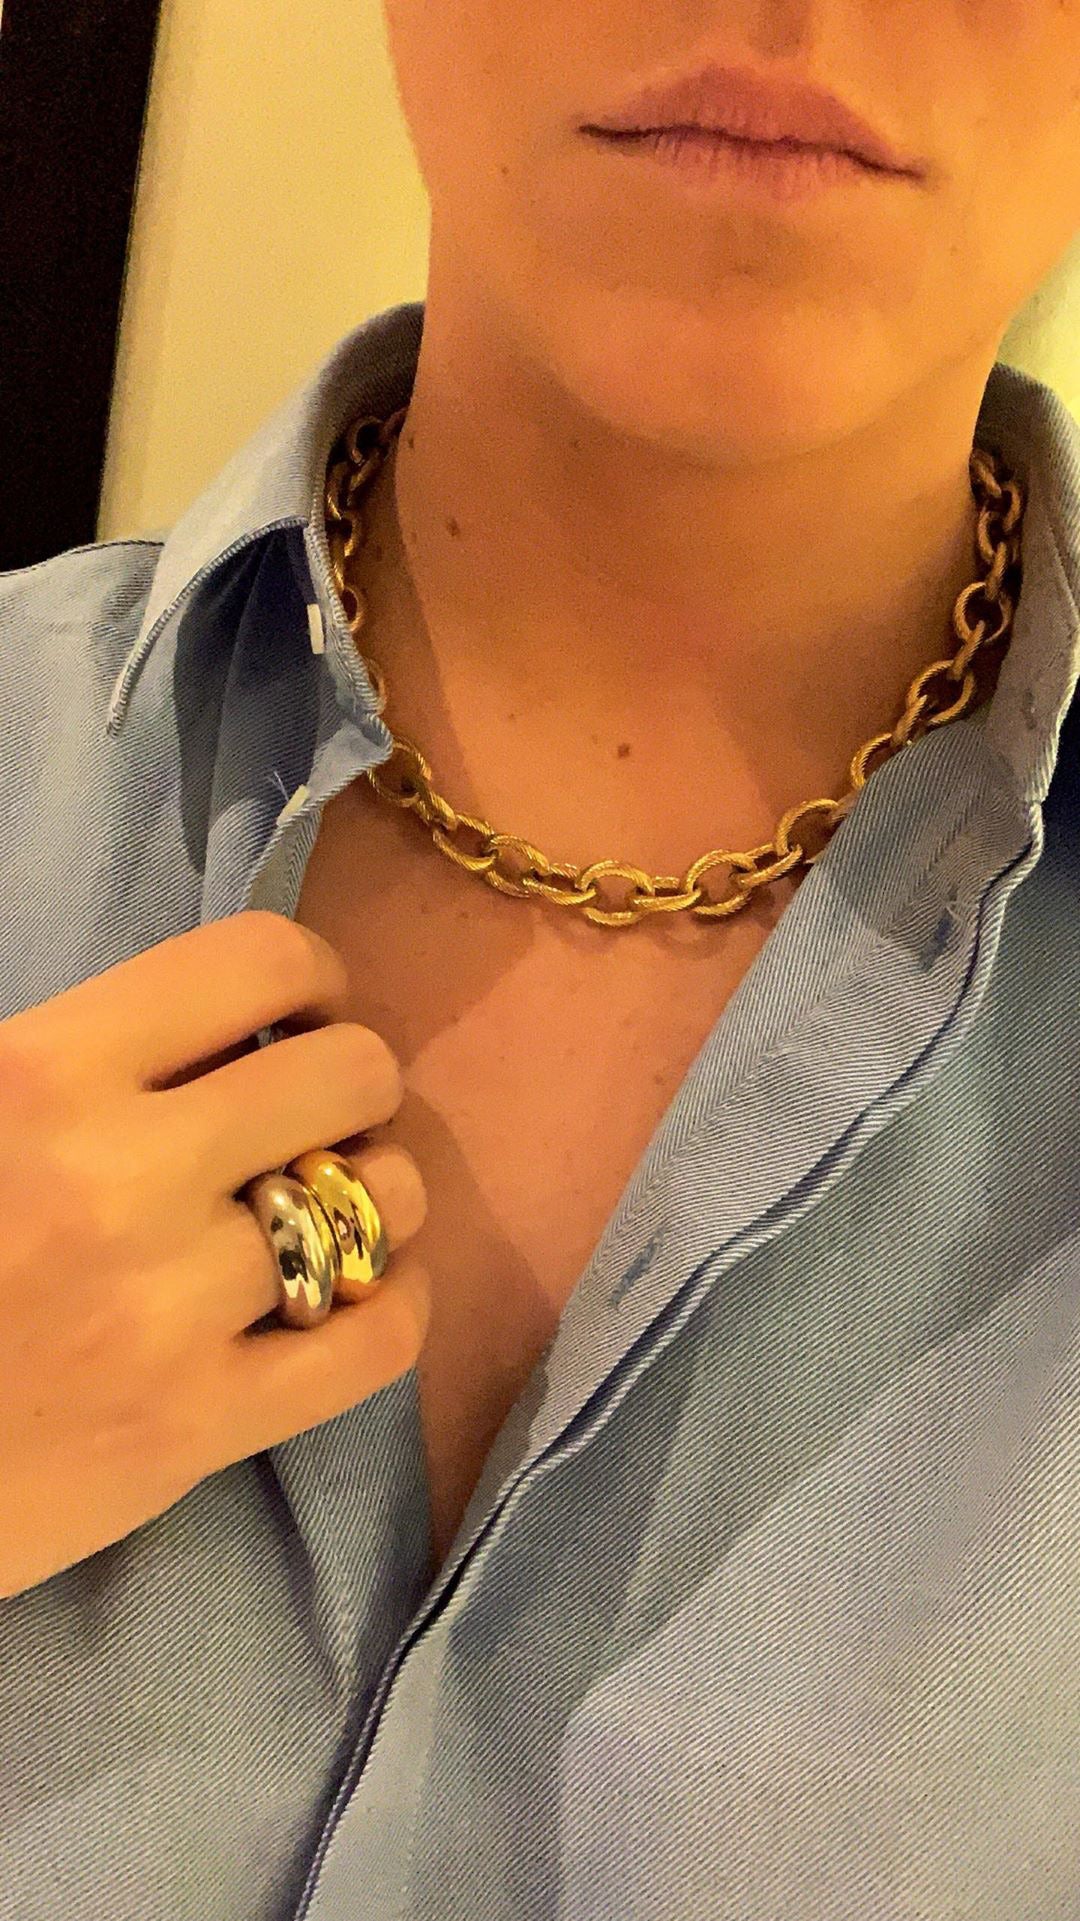 OROS // Round chain necklace